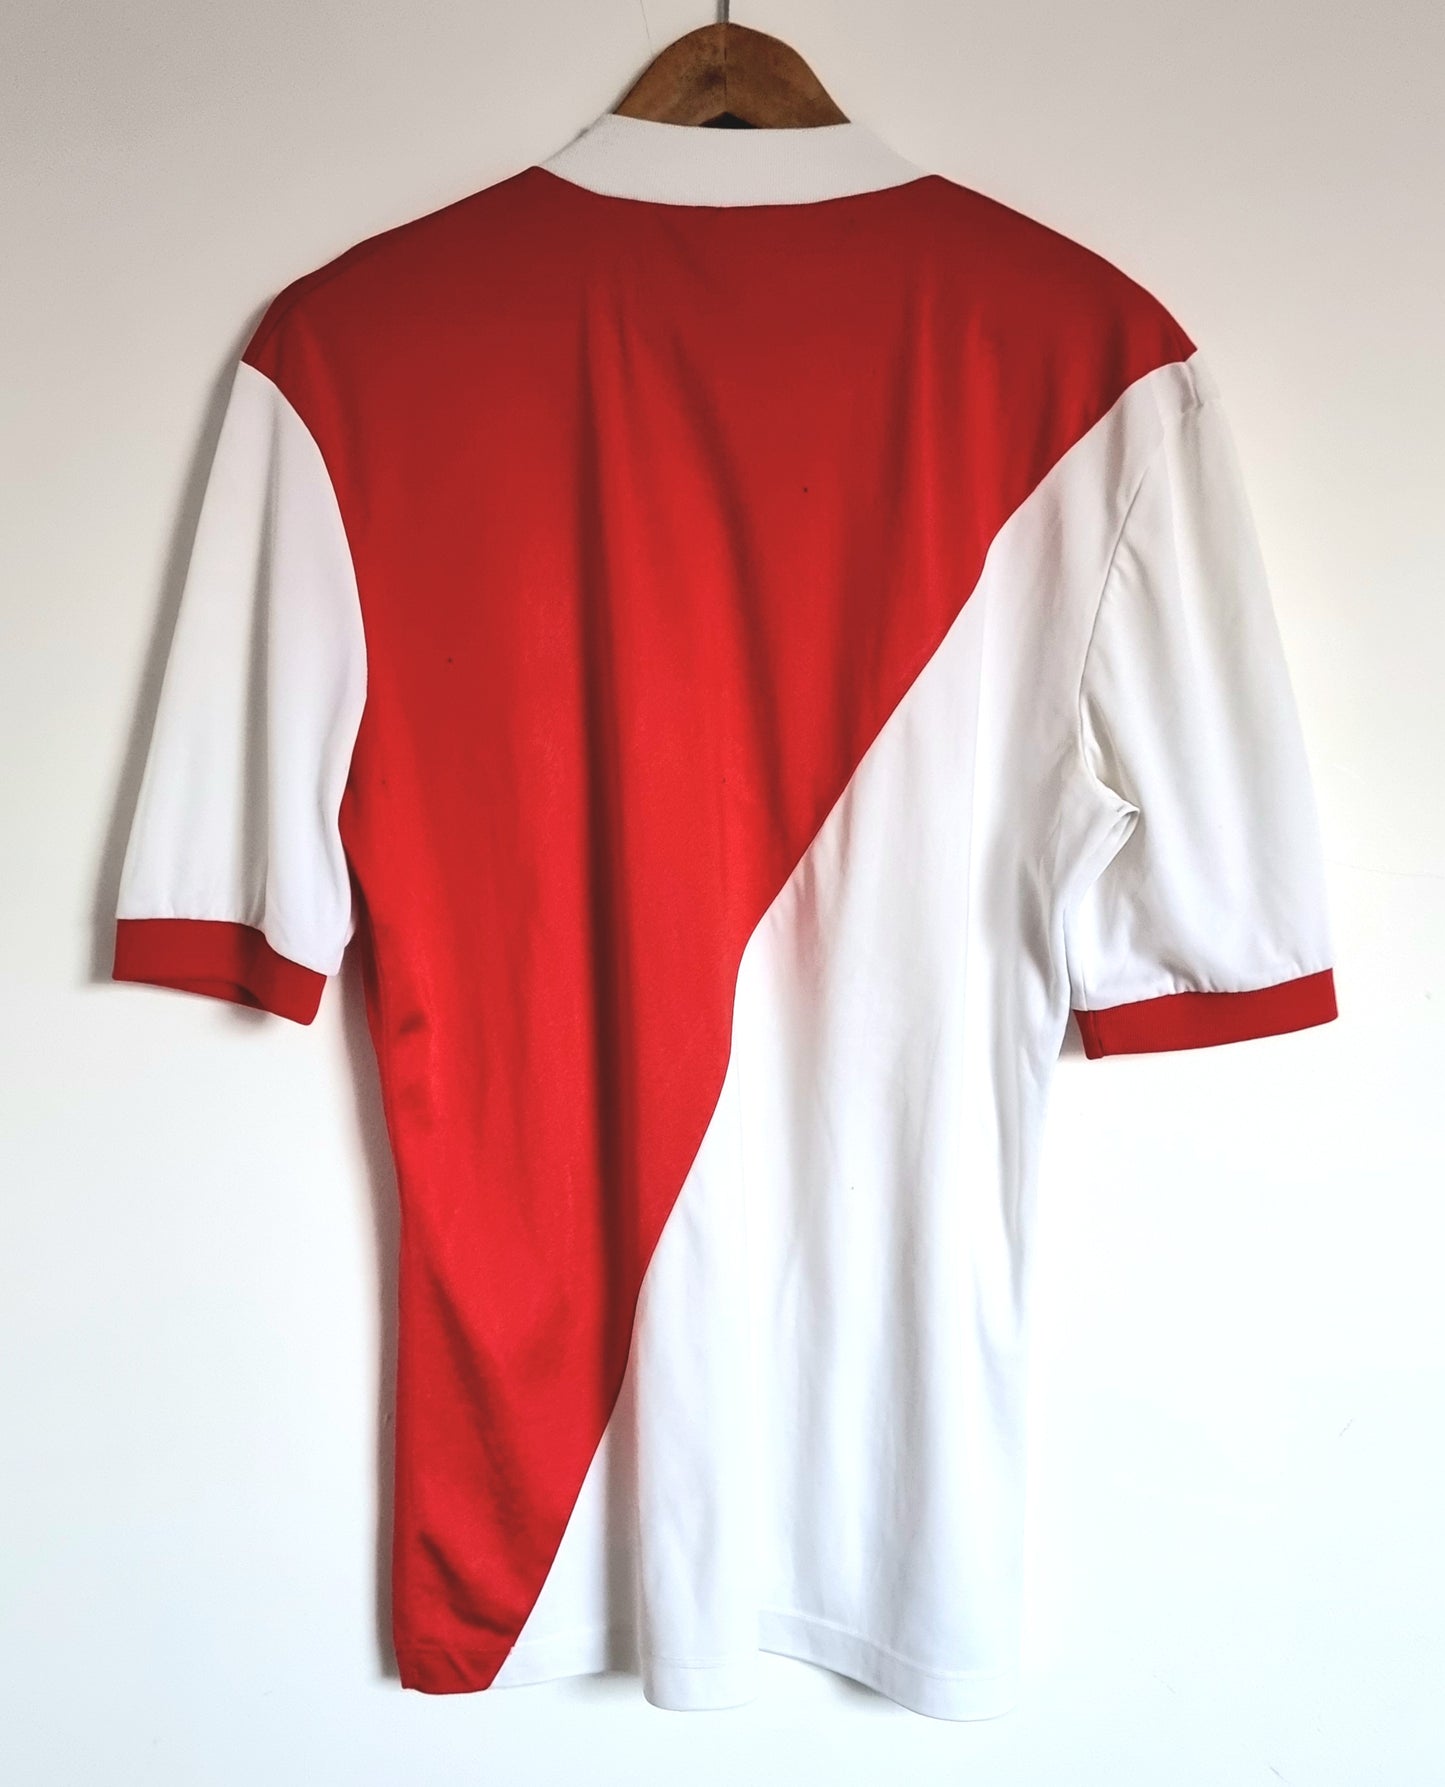 Le Coq Sportif A.S Monaco 84/85 Home Shirt Large